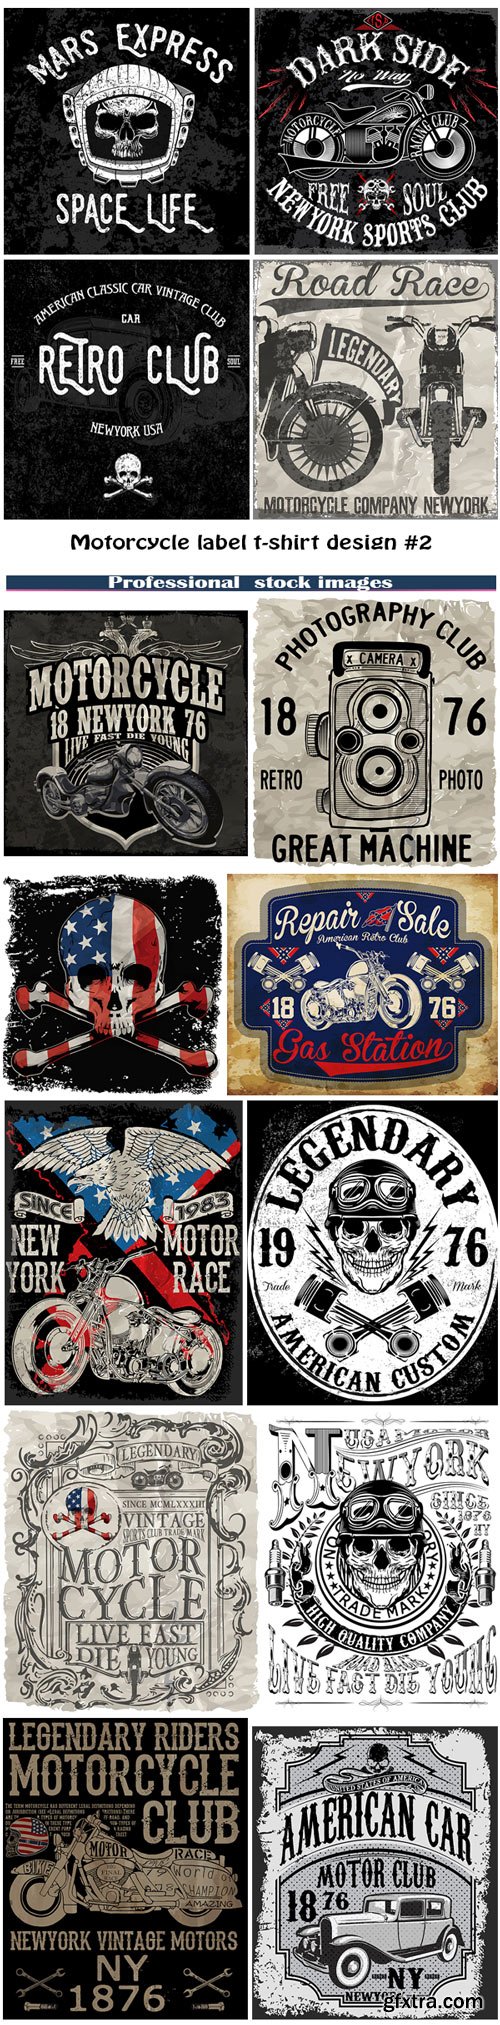 Motorcycle label t-shirt design #2